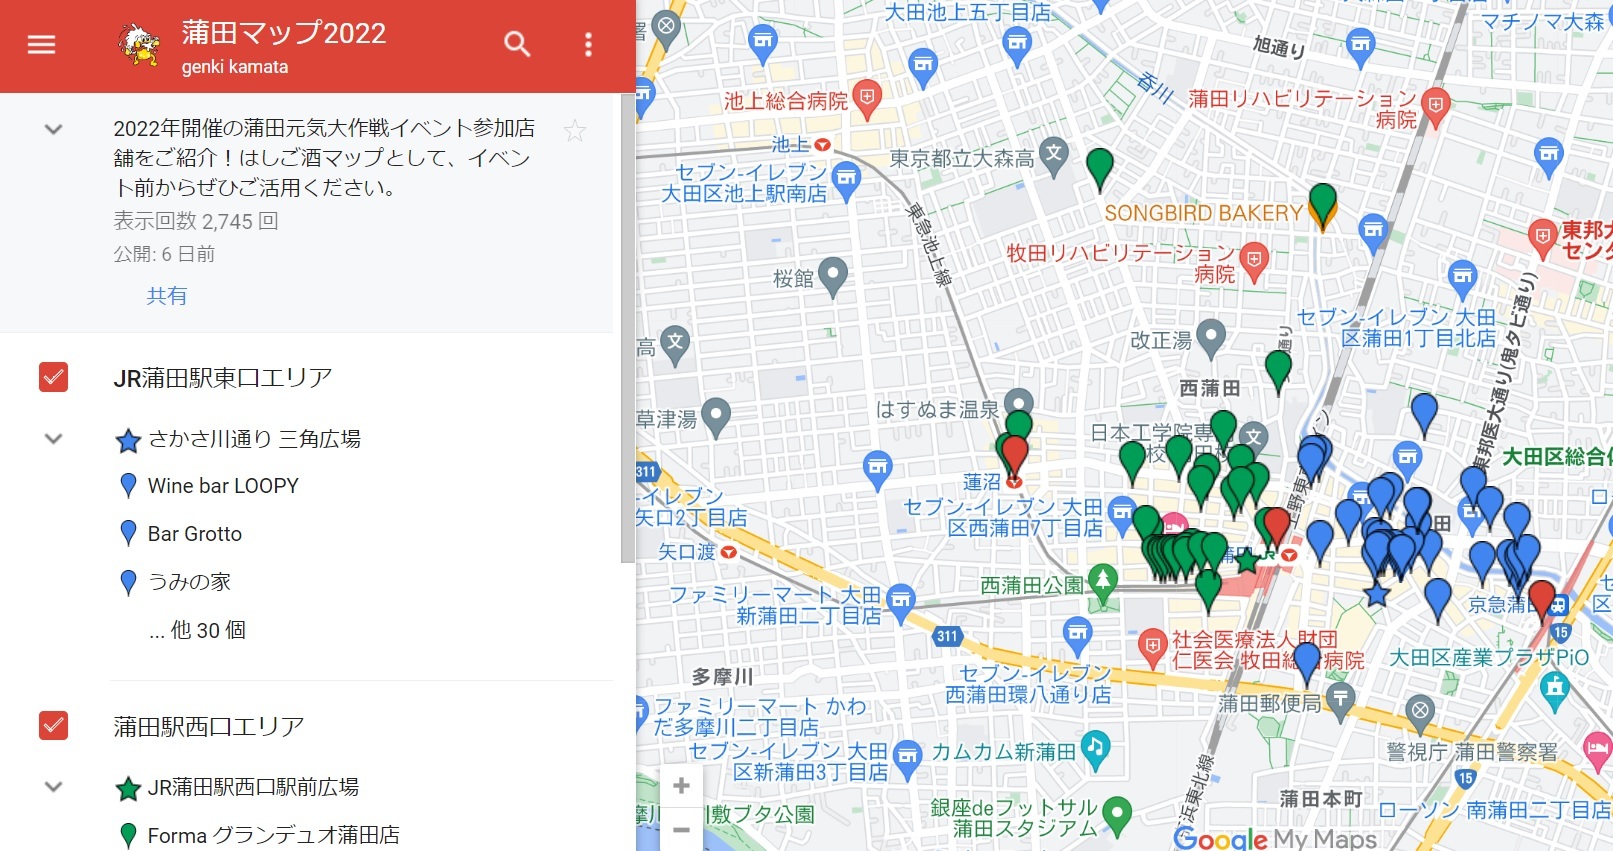 Google Mapでイベント参加店舗がわかる「蒲田マップ2022」